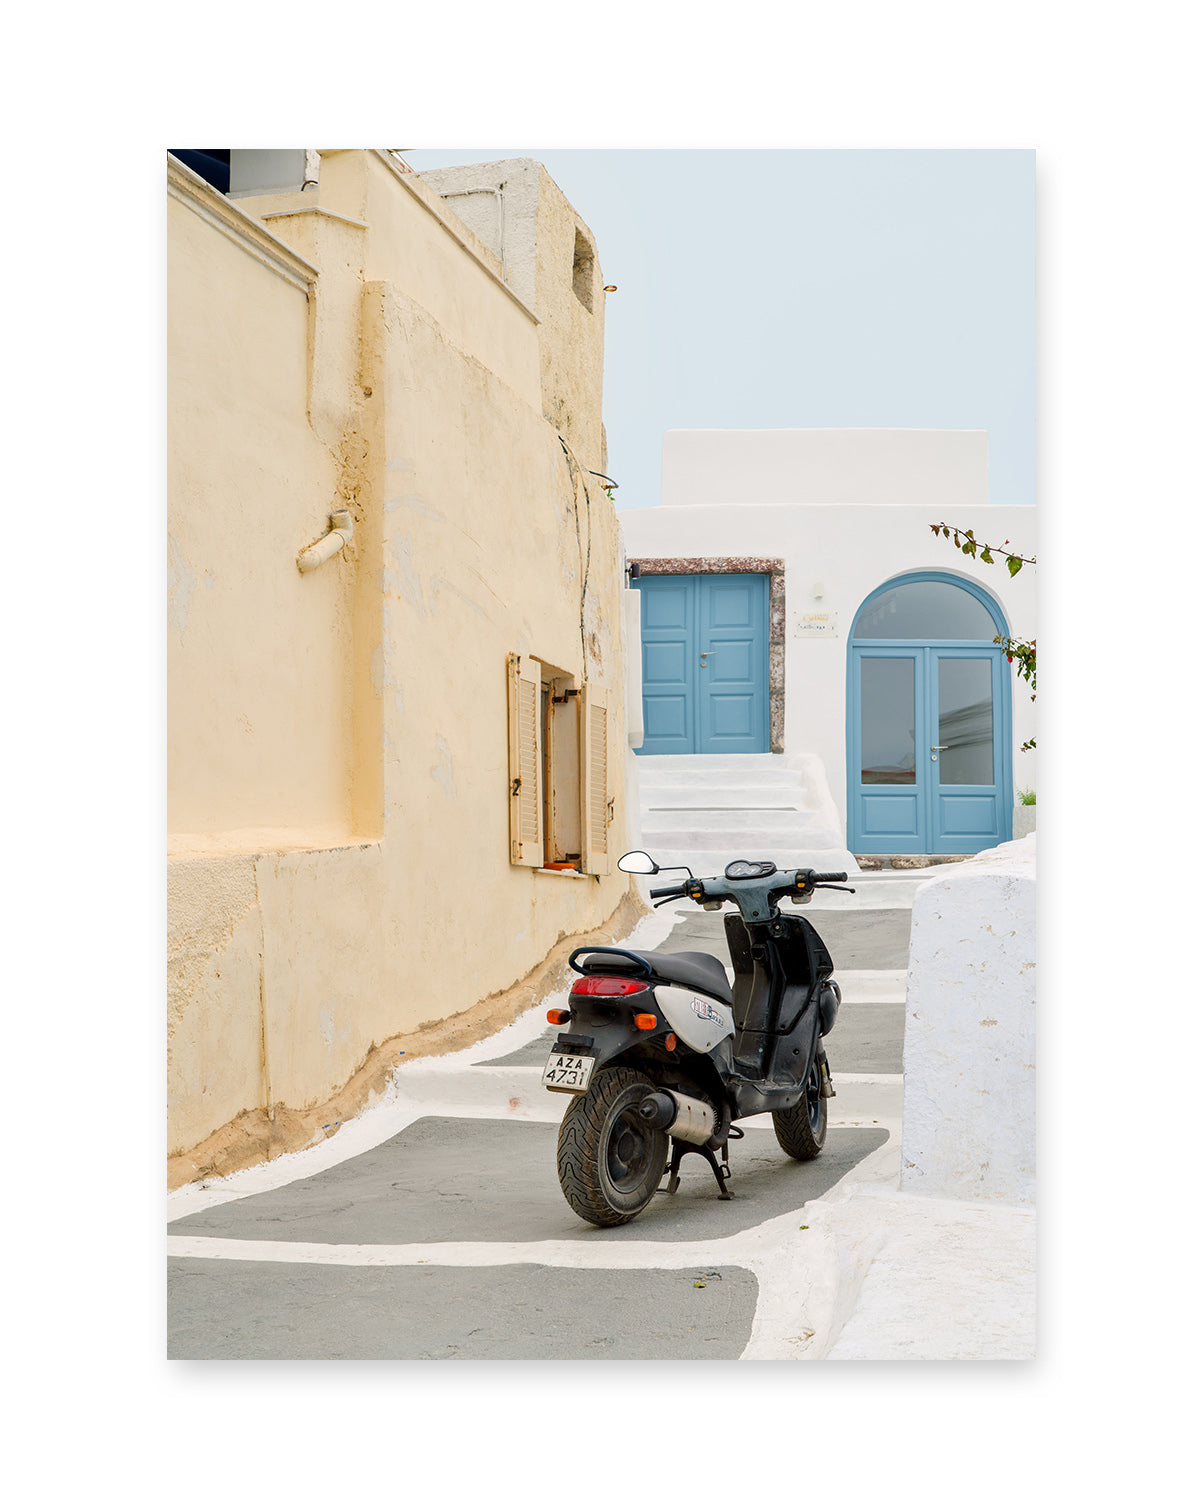 santorini greece architecture travel print, stucco white home, moped